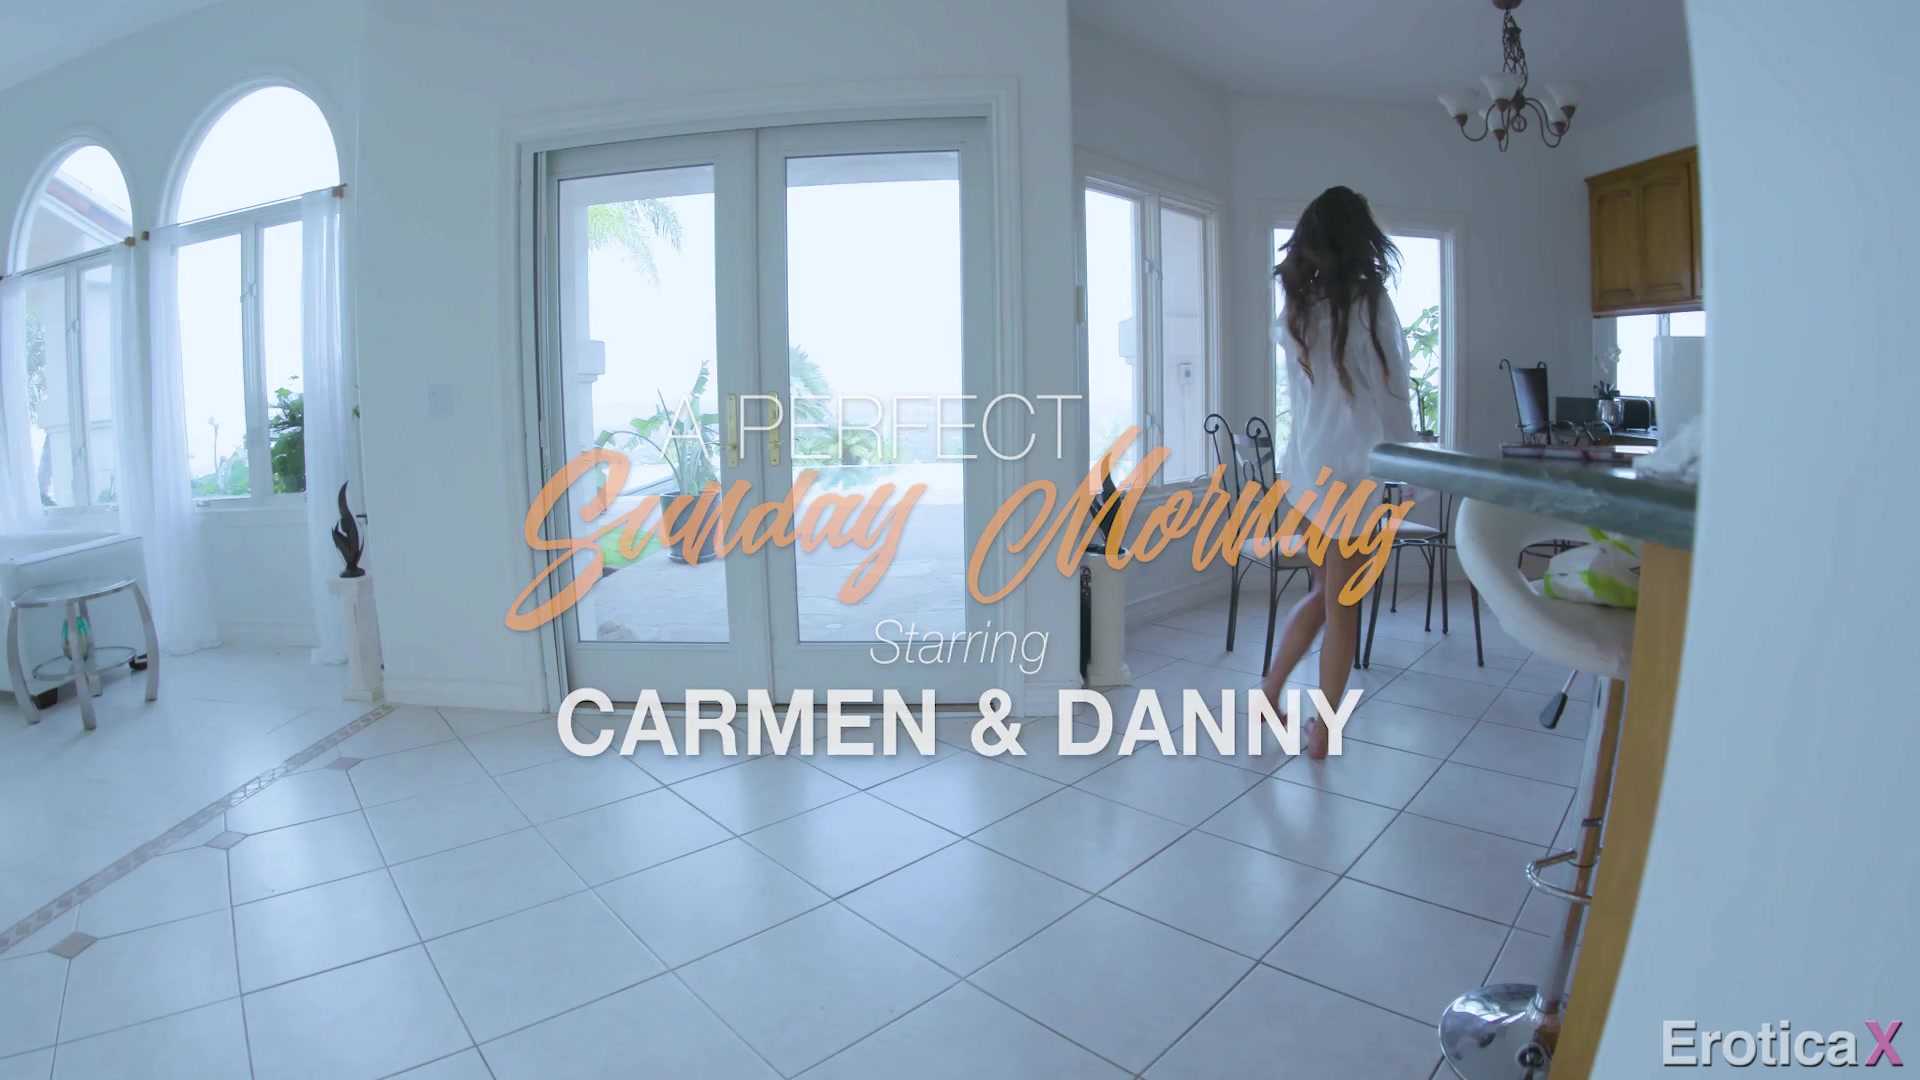 Carmen Caliente - A Perfect Sunday Morning